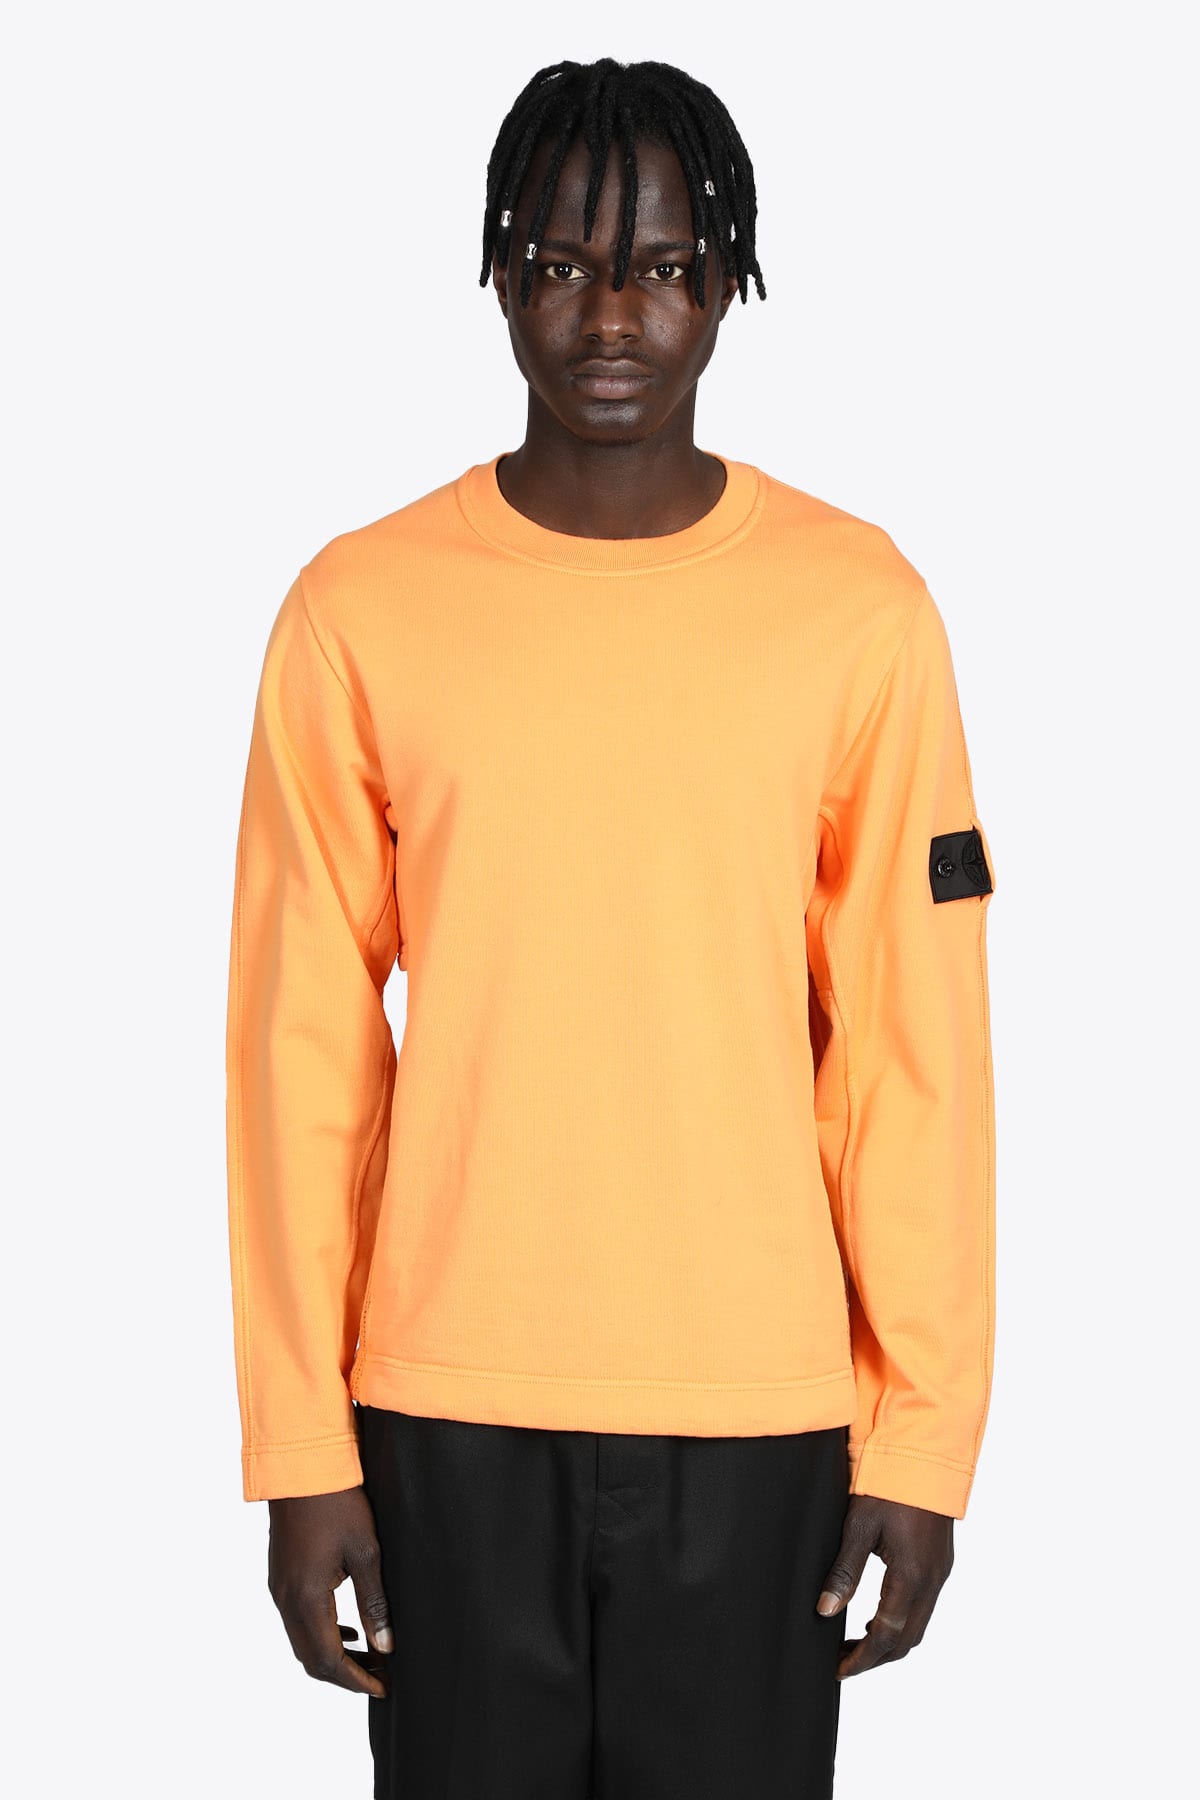 Stone Island Shadow Project Crewneck Felpa Chapter 1 Orange cotton sweatshirt with mesh panel